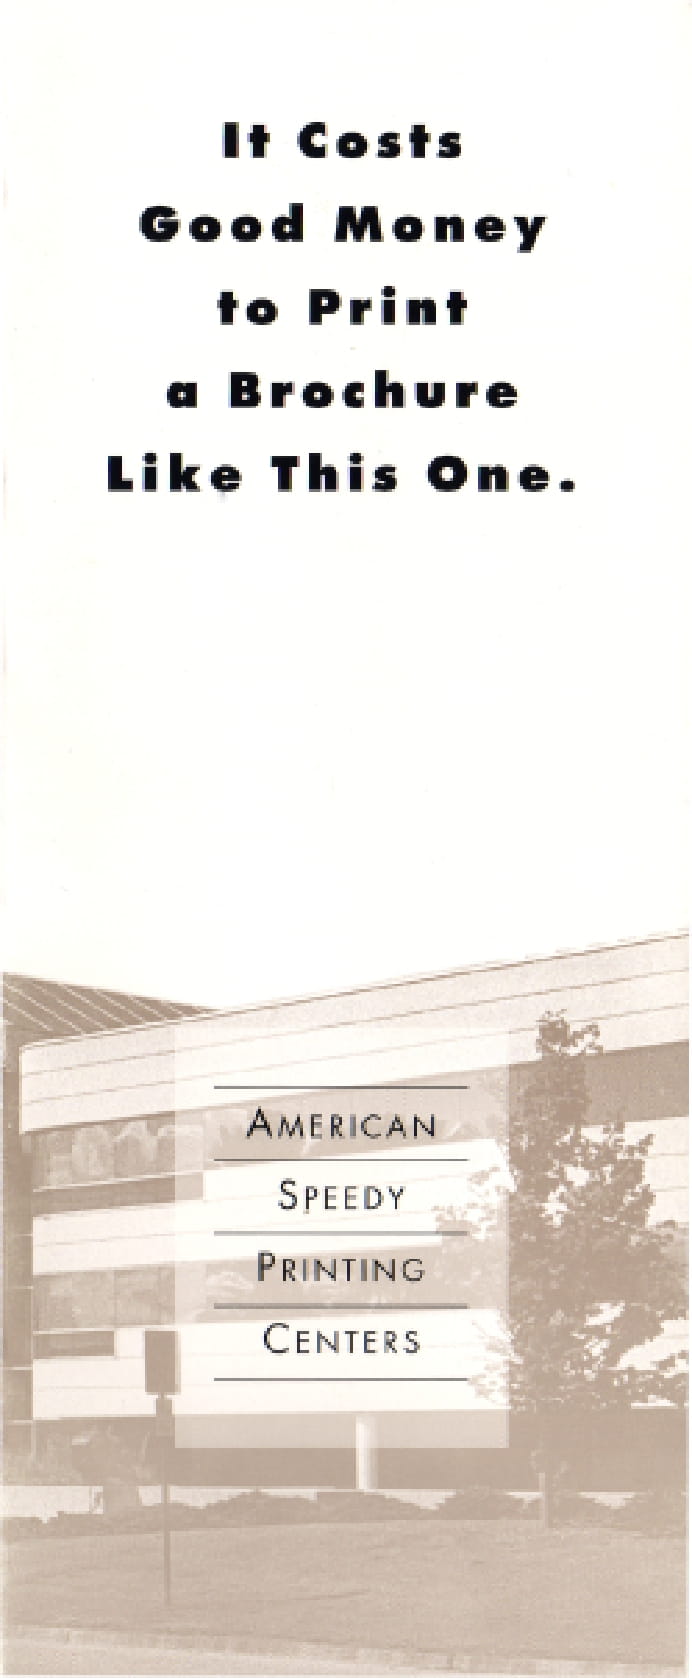 American Speedy Printing Franchise Recruiting Brochure